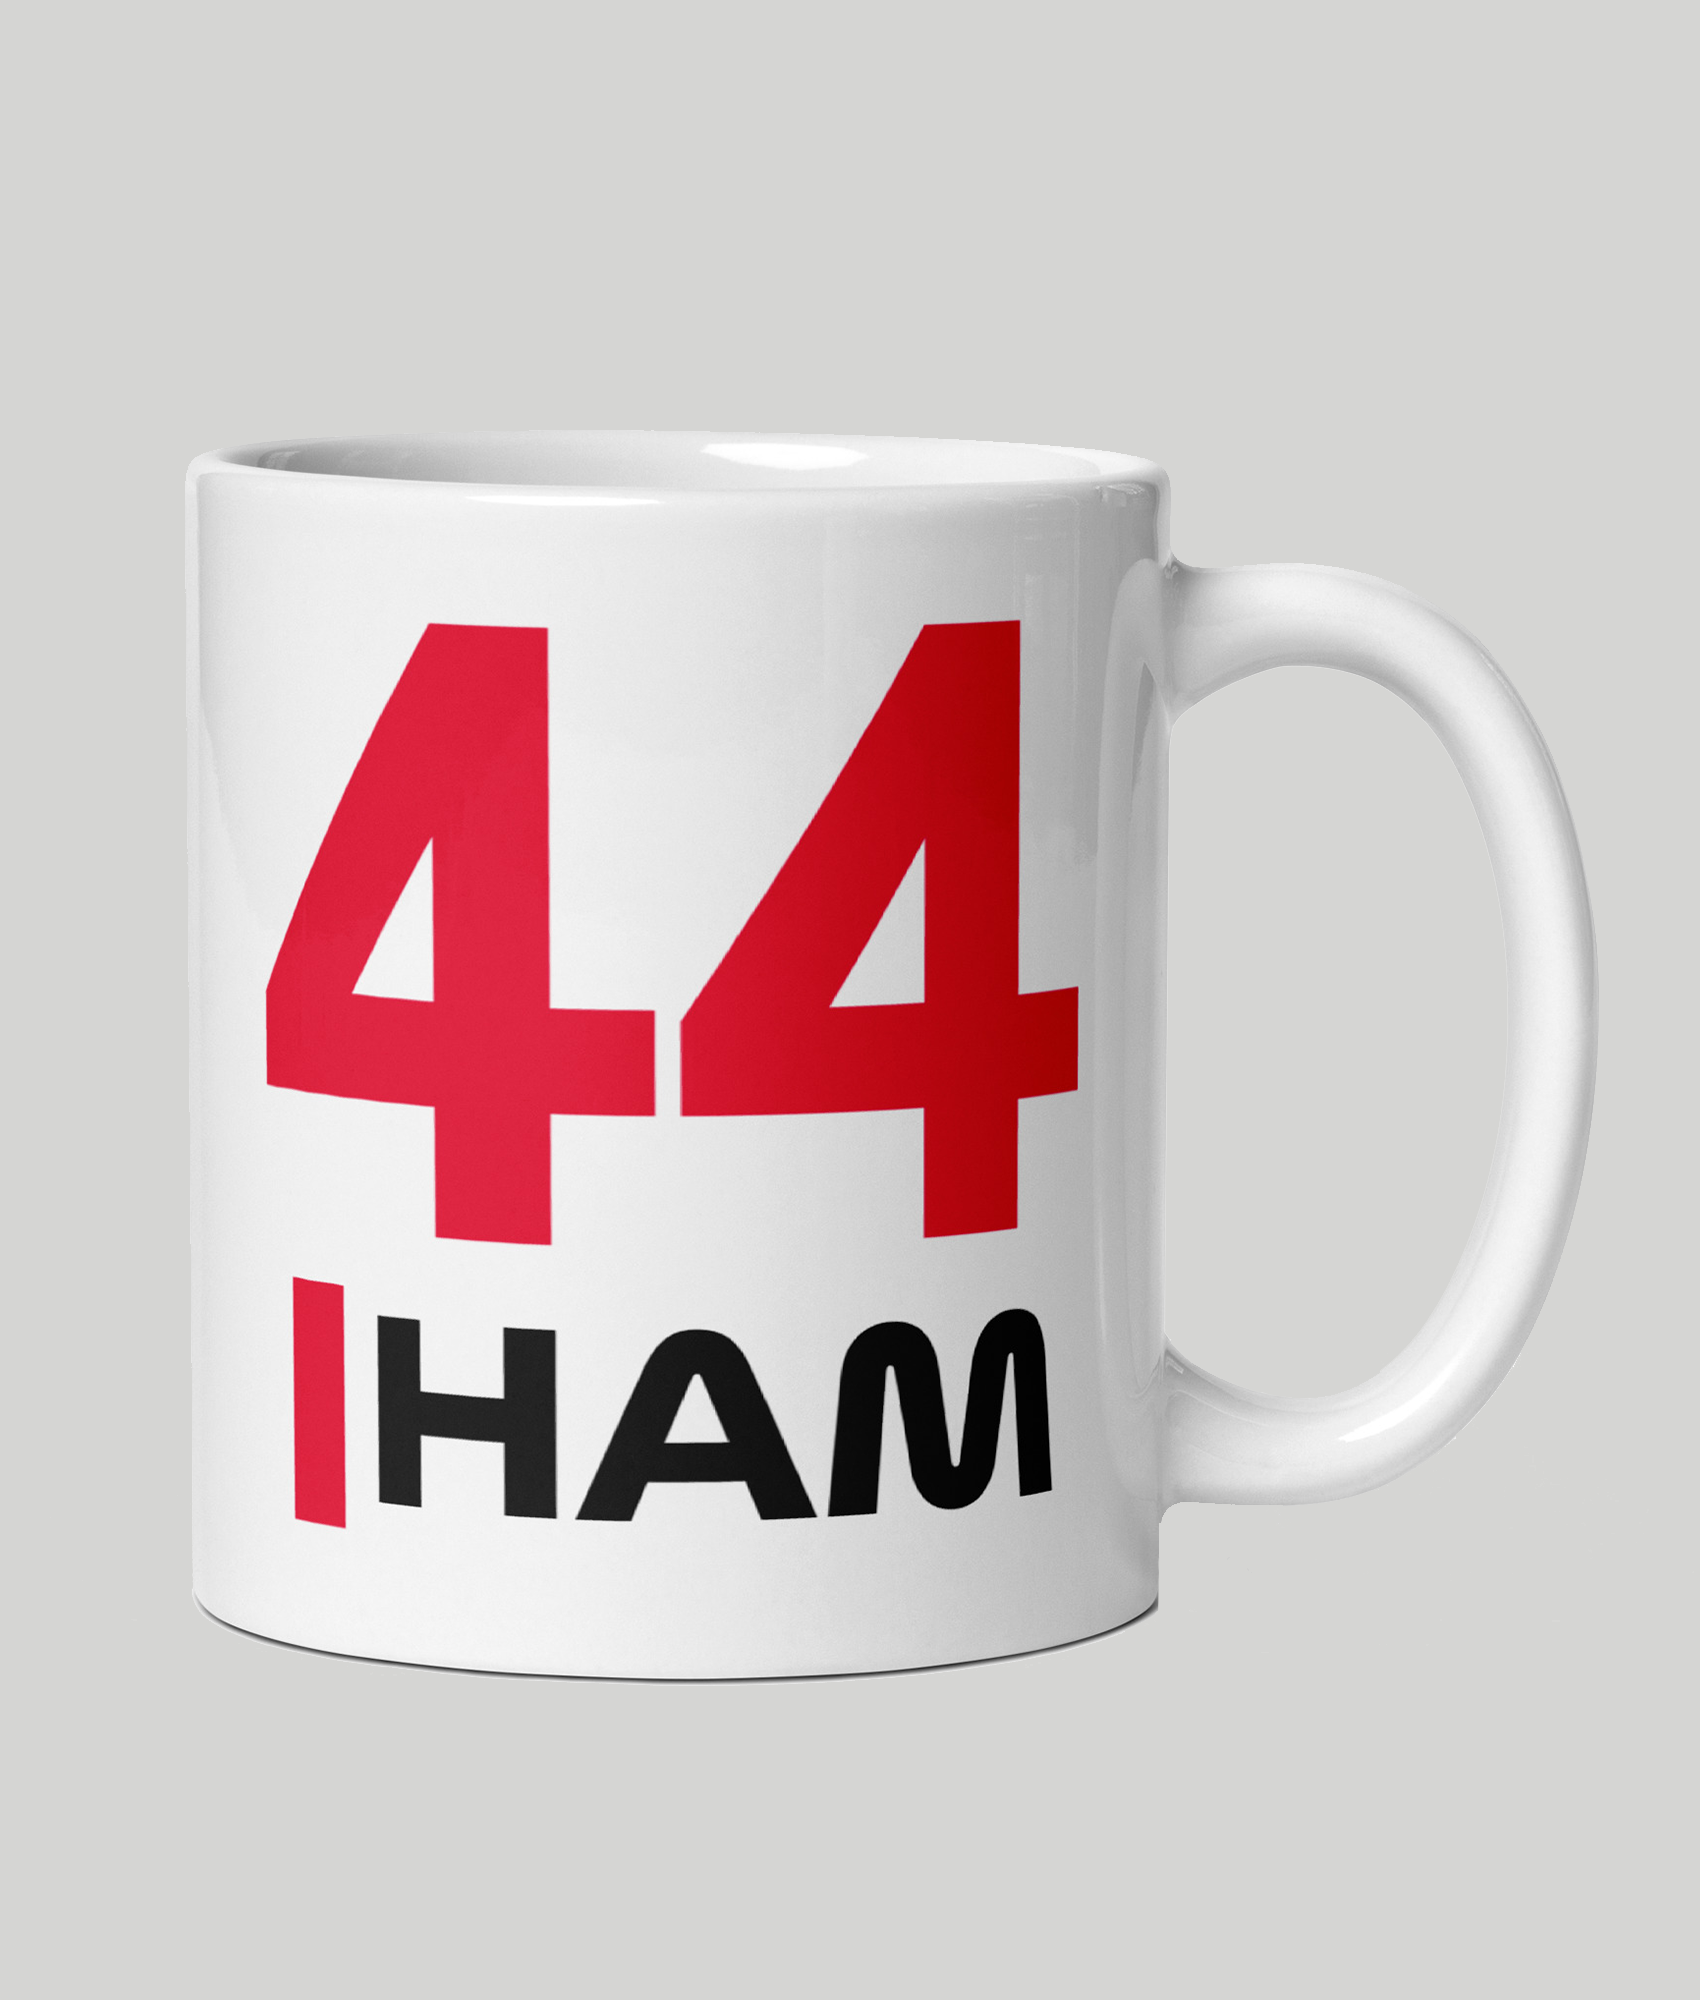 Lewis Hamilton 44 Ferrari Mug